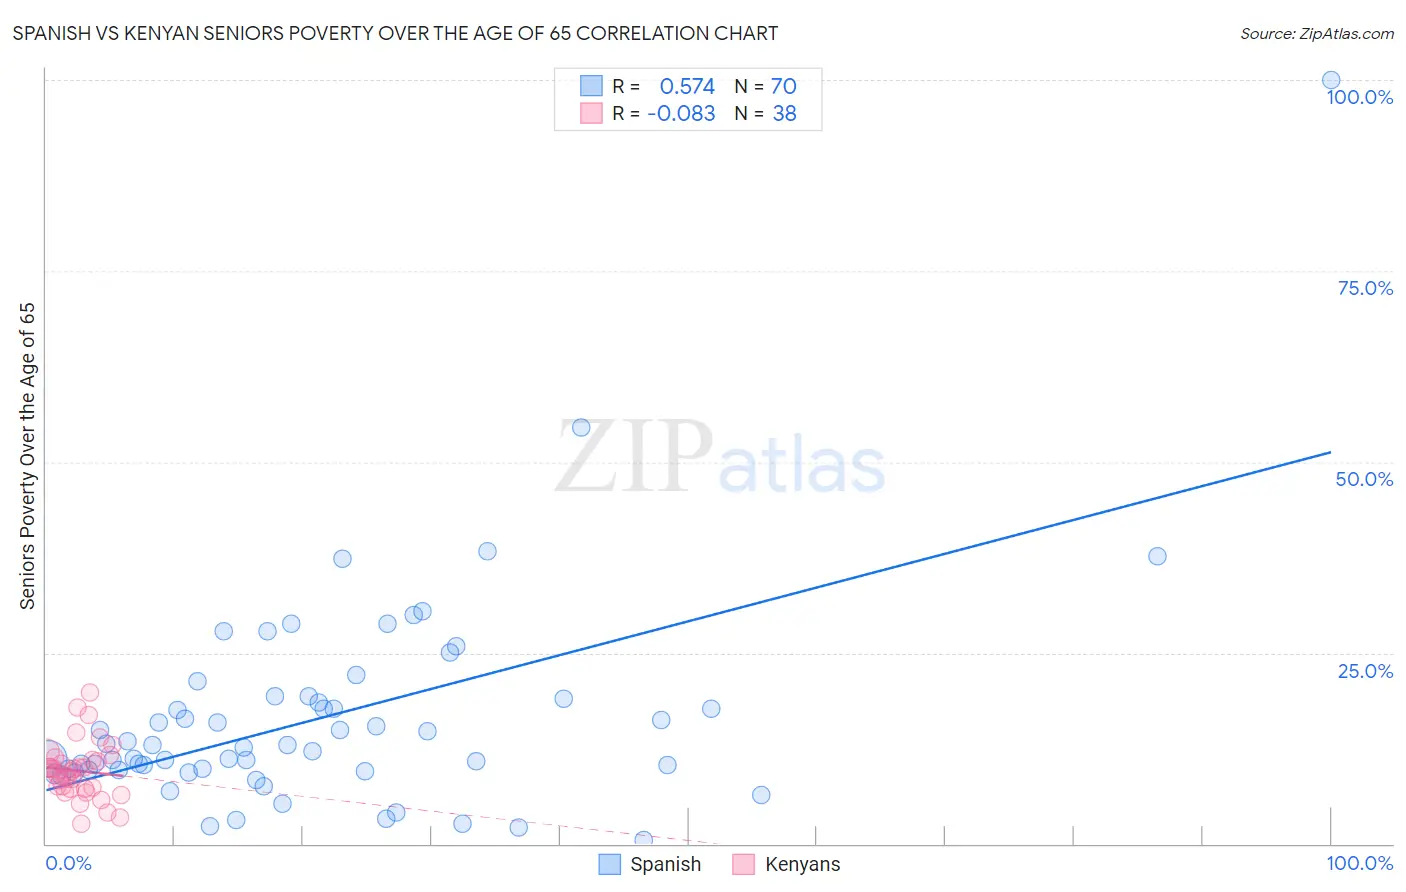 Spanish vs Kenyan Seniors Poverty Over the Age of 65